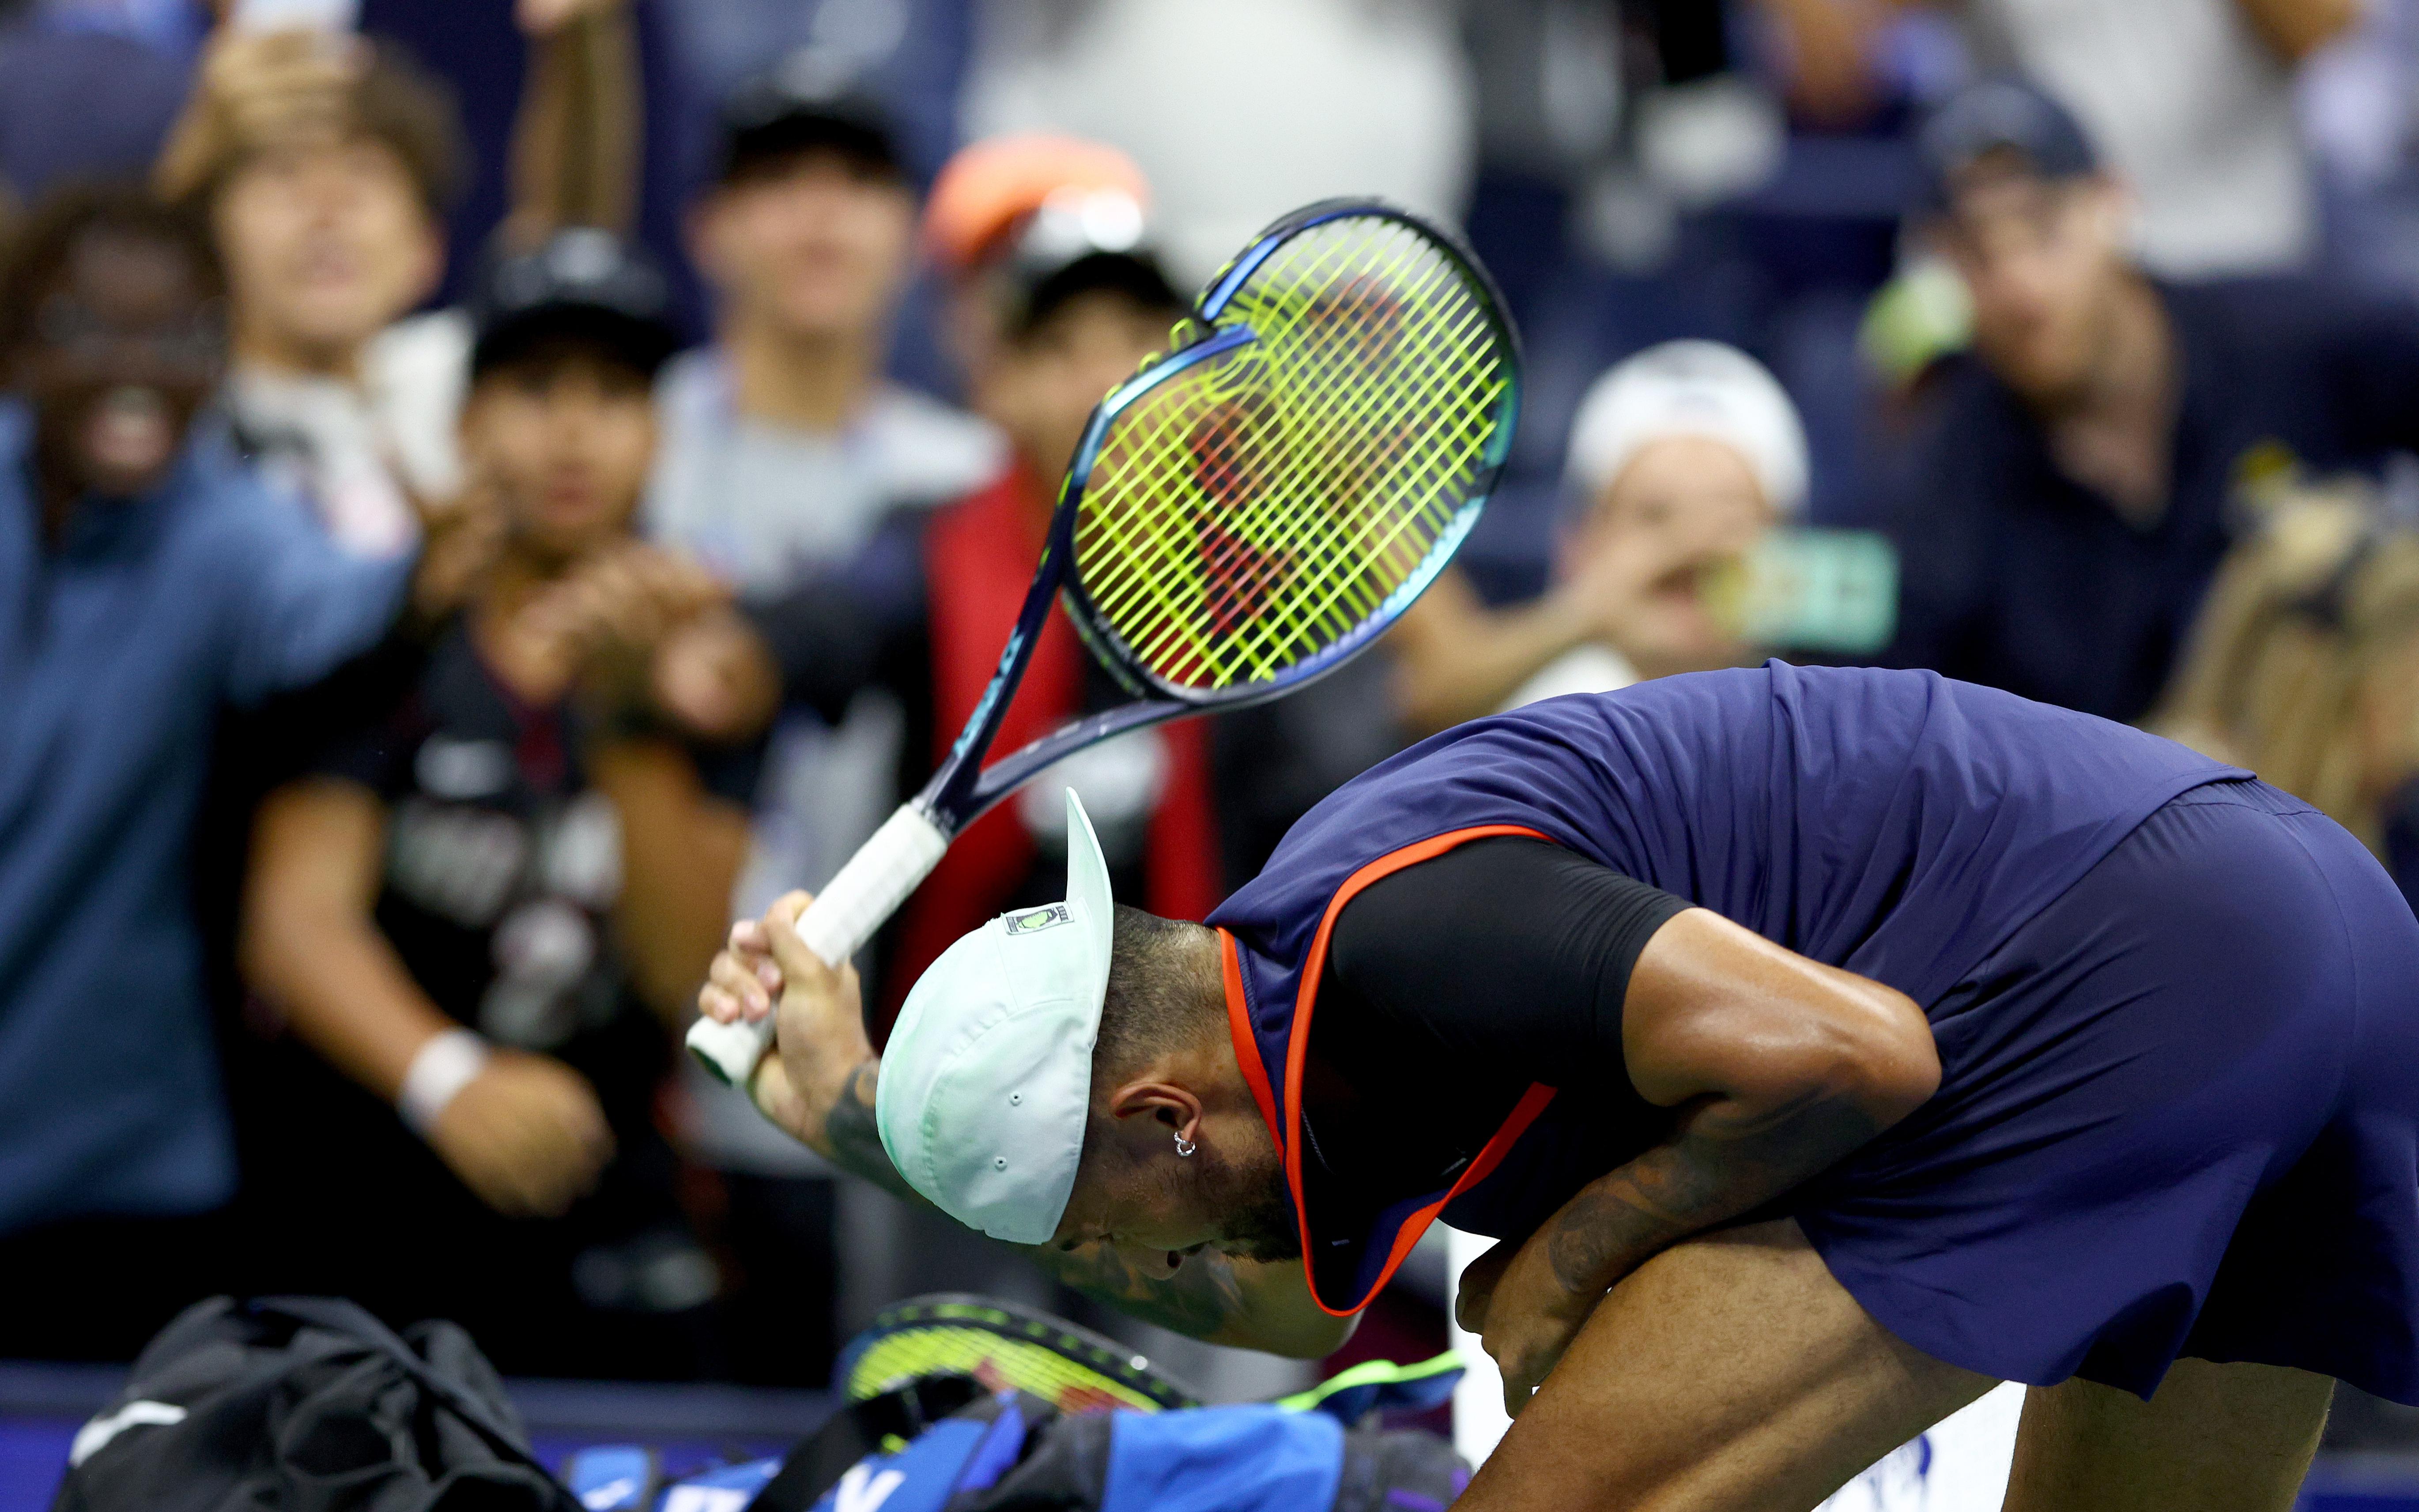 Кирьос сломал две ракетки после поражения от Хачанова на US Open. Видео